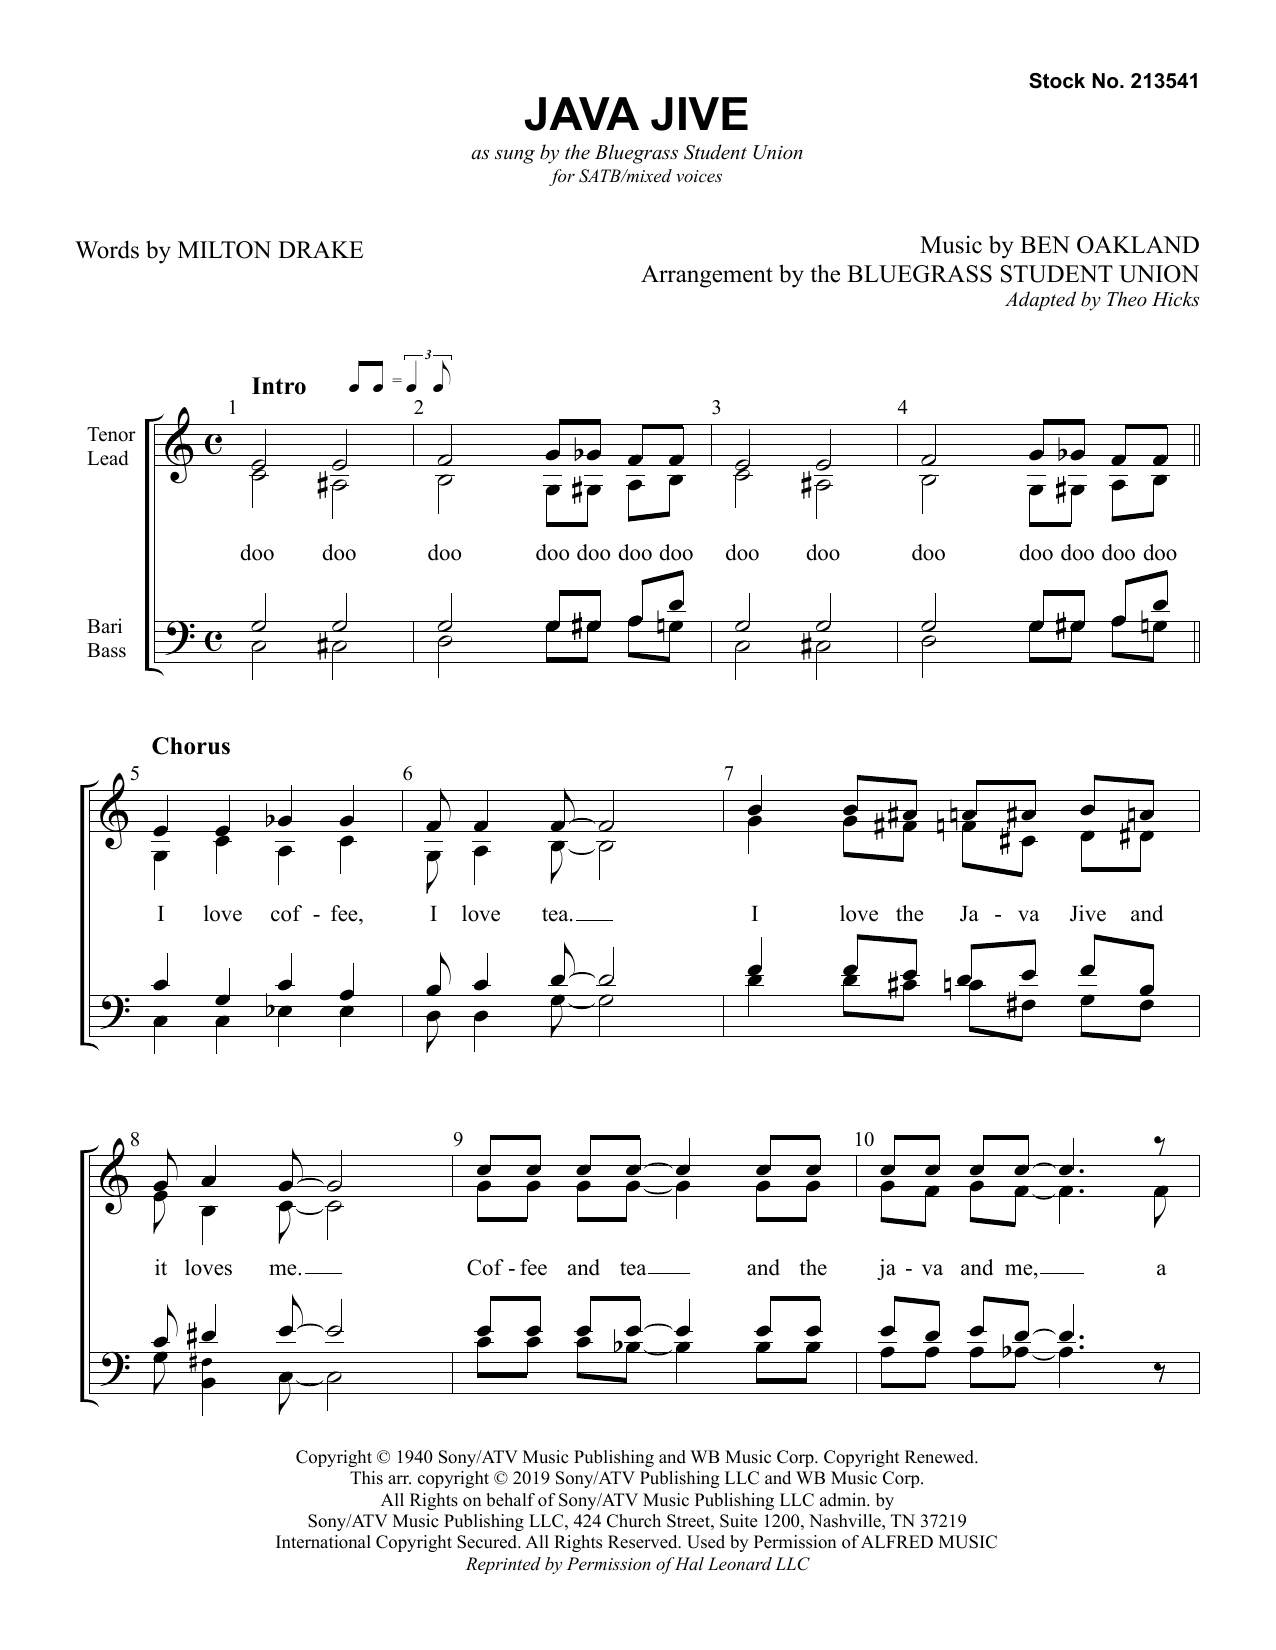 Milton Drake & Ben Oakland Java Jive (arr. Bluegrass Student Union) Sheet Music Notes & Chords for SATB Choir - Download or Print PDF